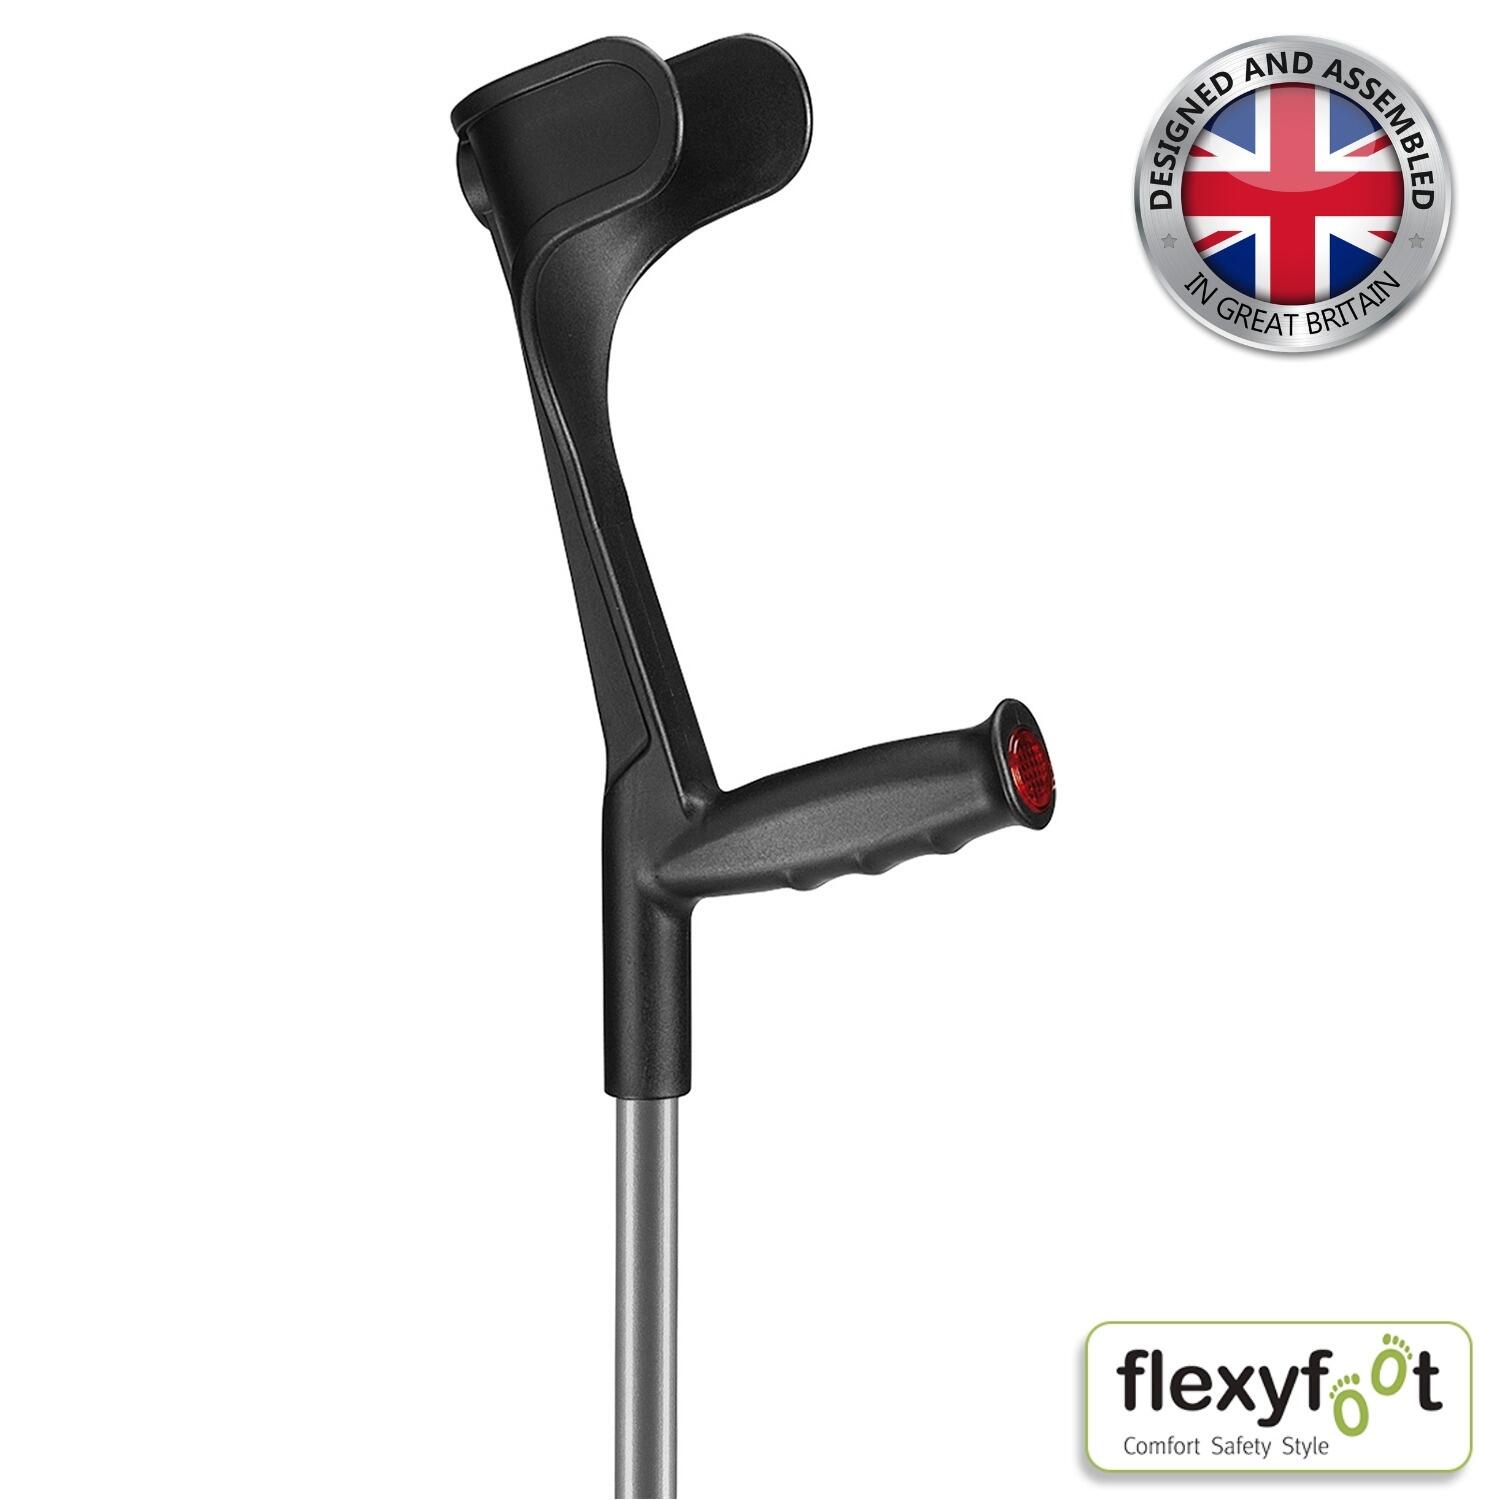 Flexyfoot Soft Grip Shock Absorbing Open Cuff Crutch - Grey - Cuff and Handle